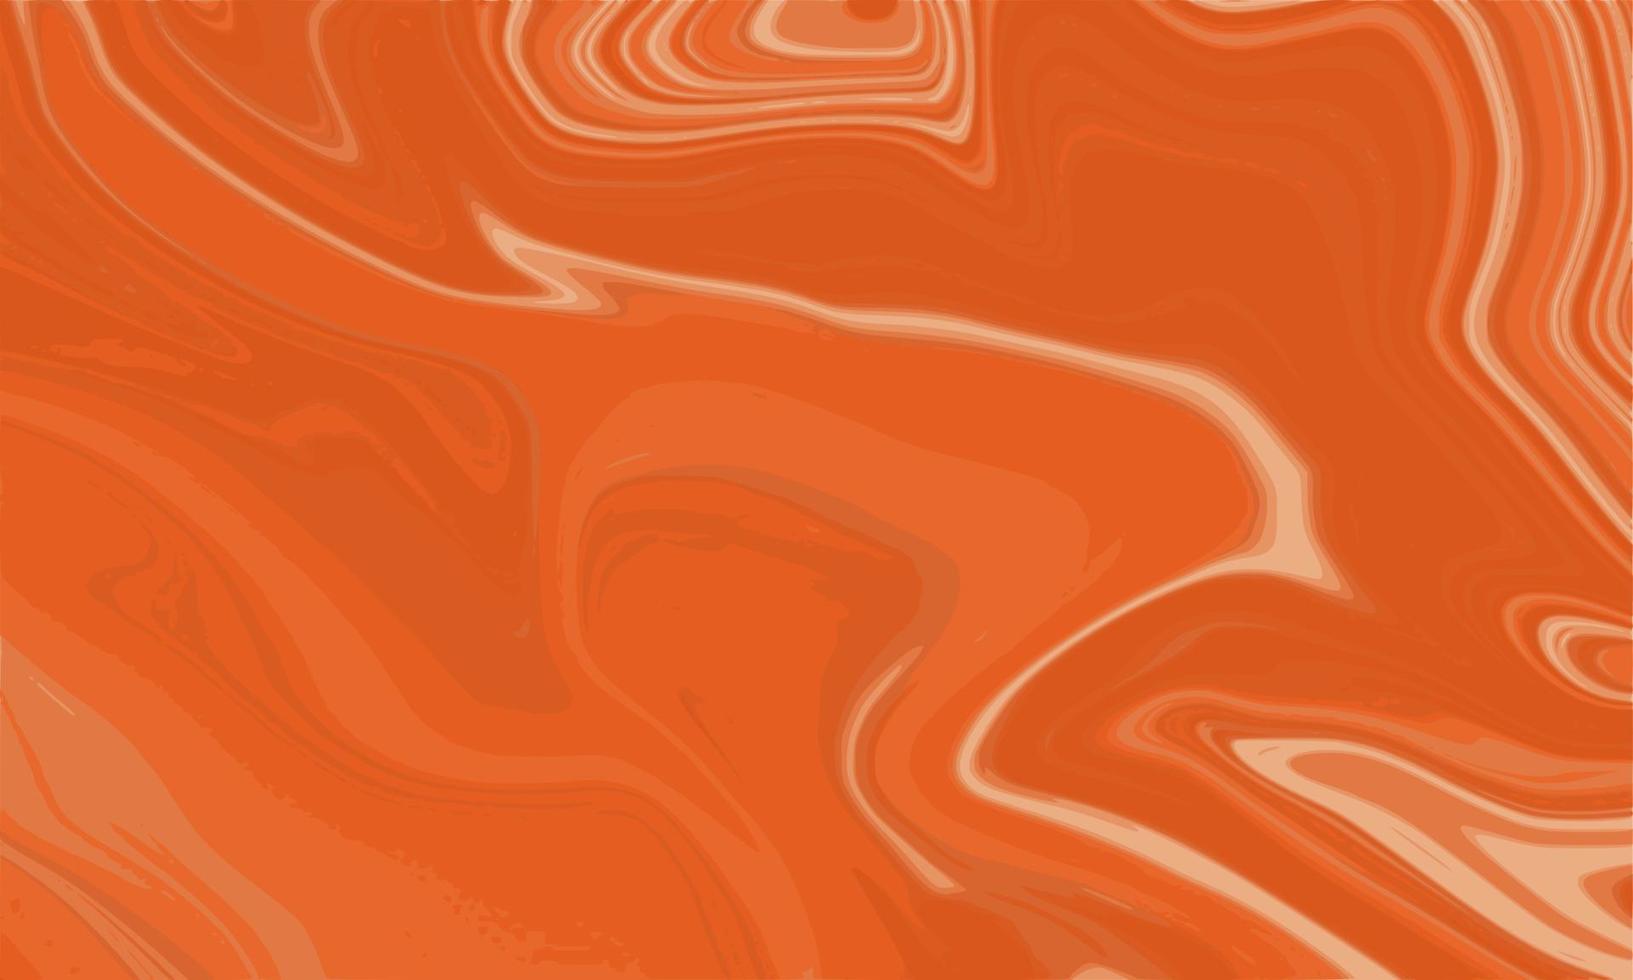 Abstract Orange Liquid Marble Background vector